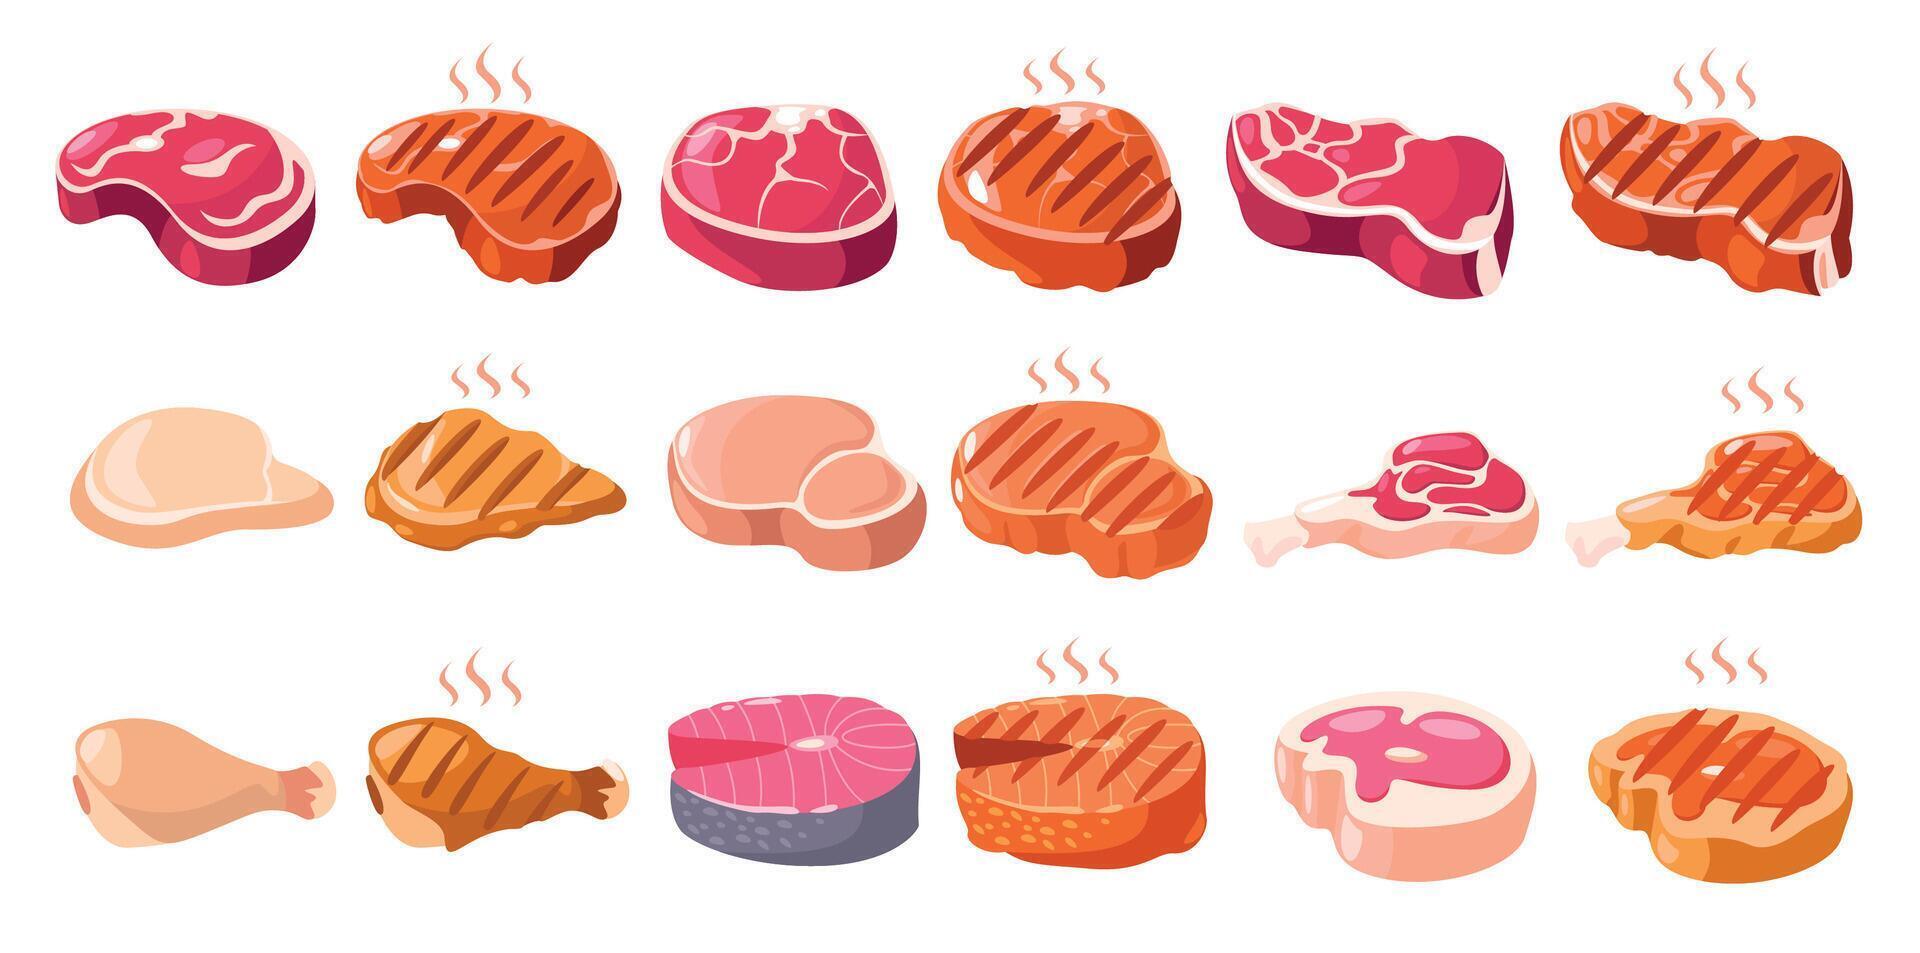 vlees lende. tekenfilm gesneden slagerij steaks voor barbecue, gekookt gegrild geroosterd varkensvlees, rauw rundvlees rib lam entrecote, vers producten concept. vector vlak reeks